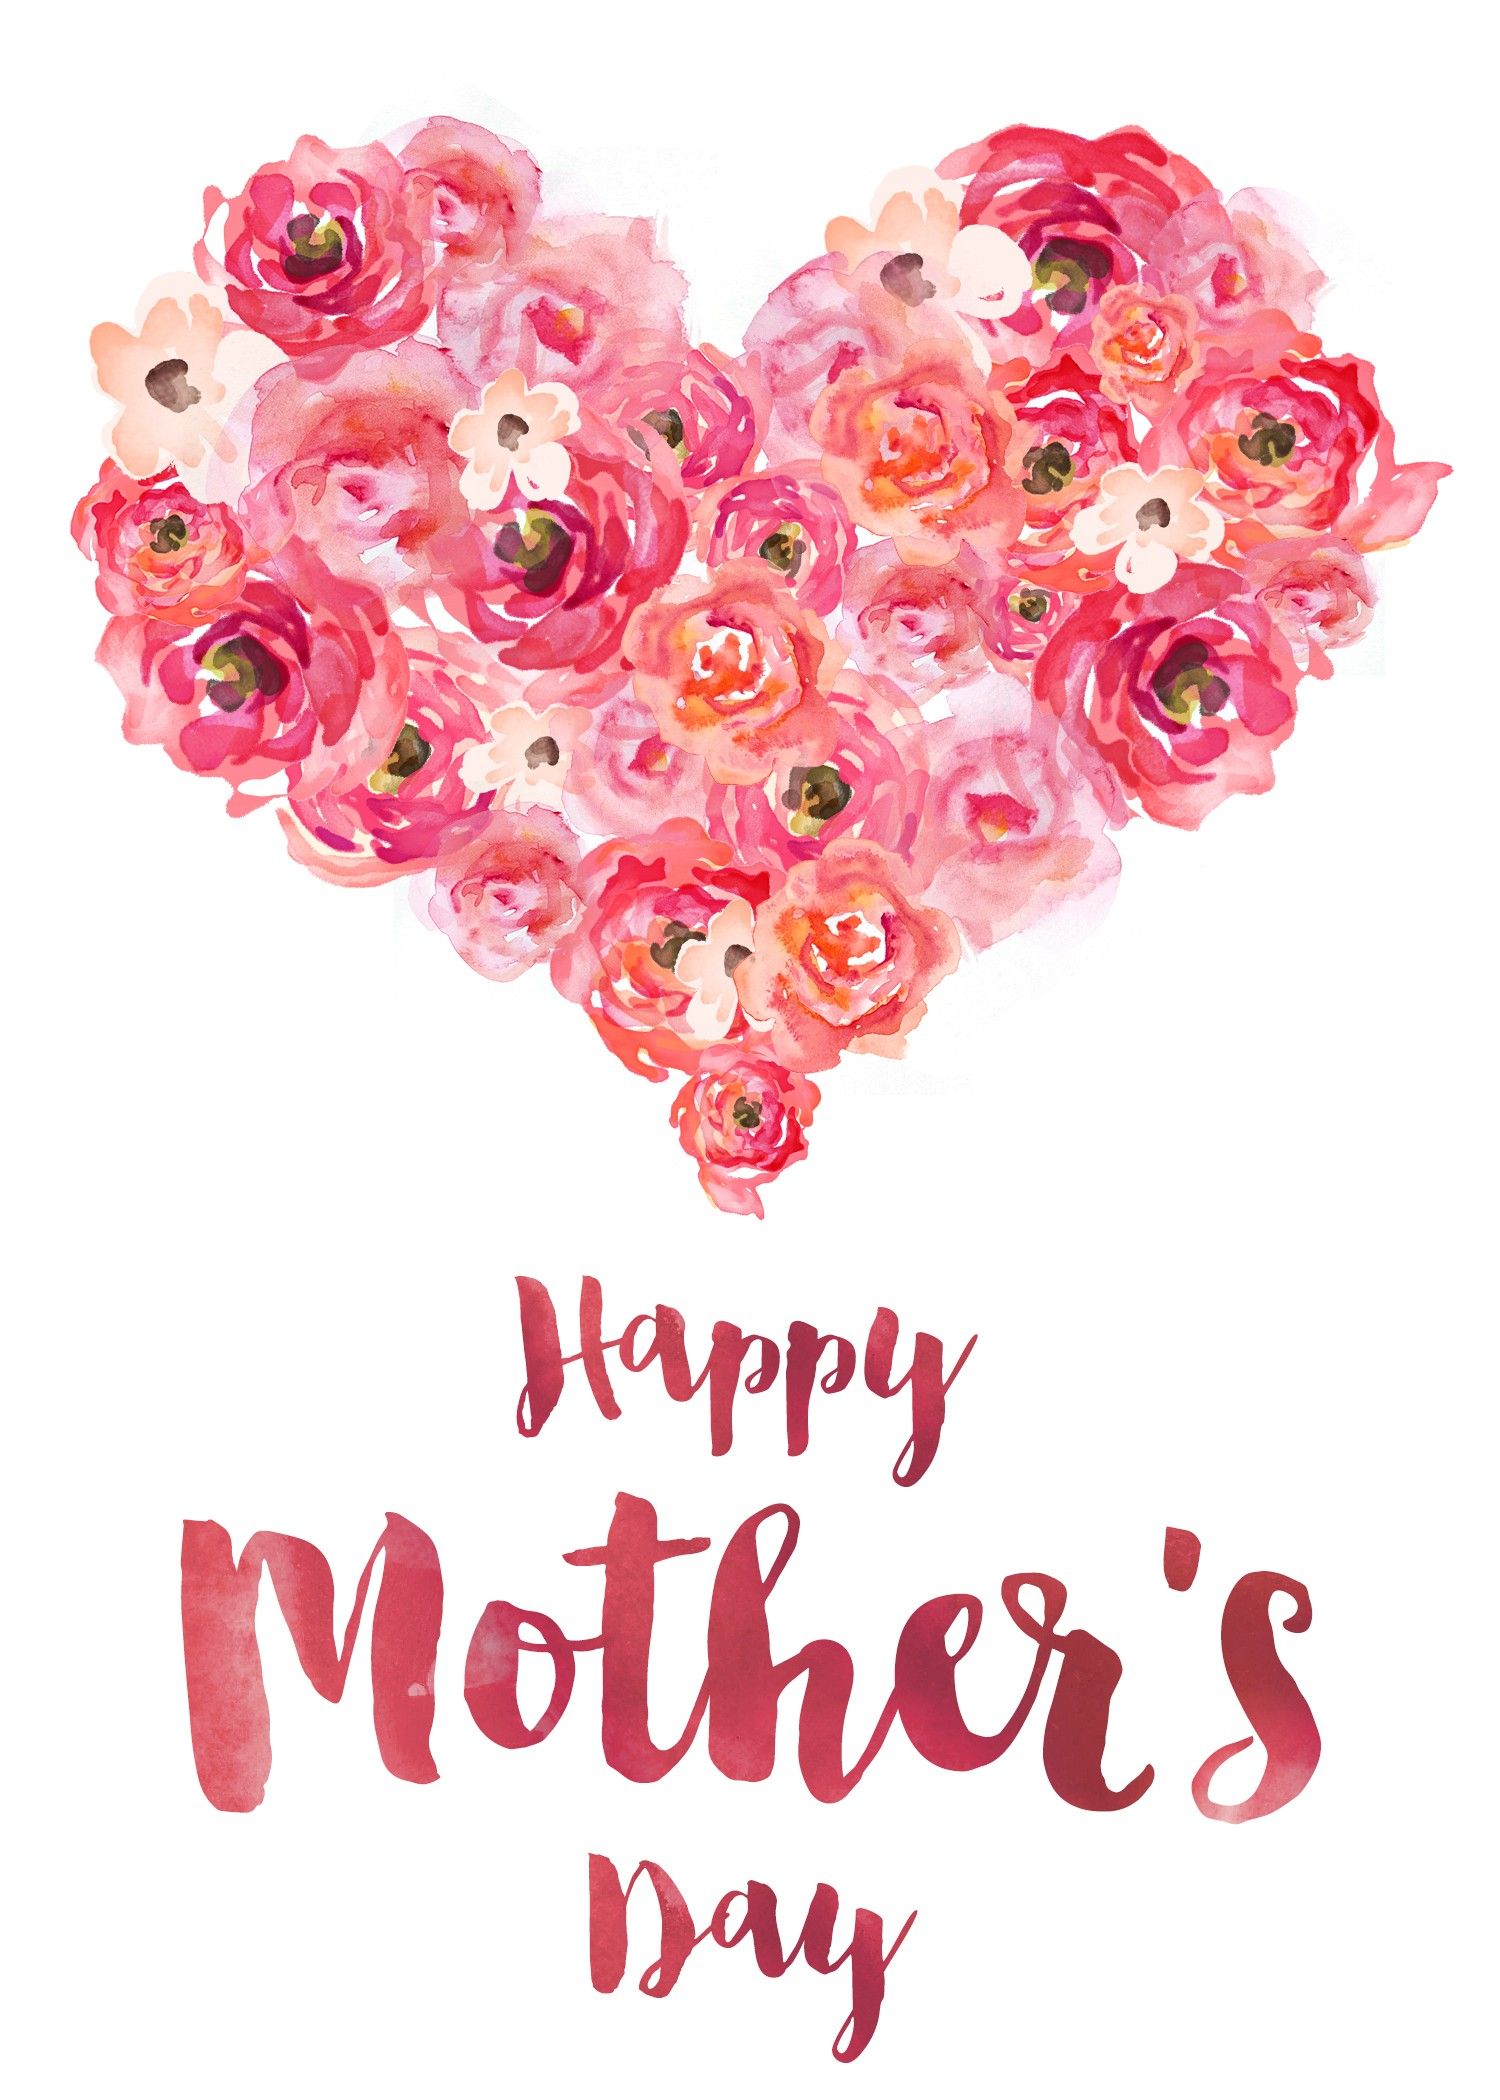 Free Mothers Day Card Image Full HD Desktop Image Windows 10